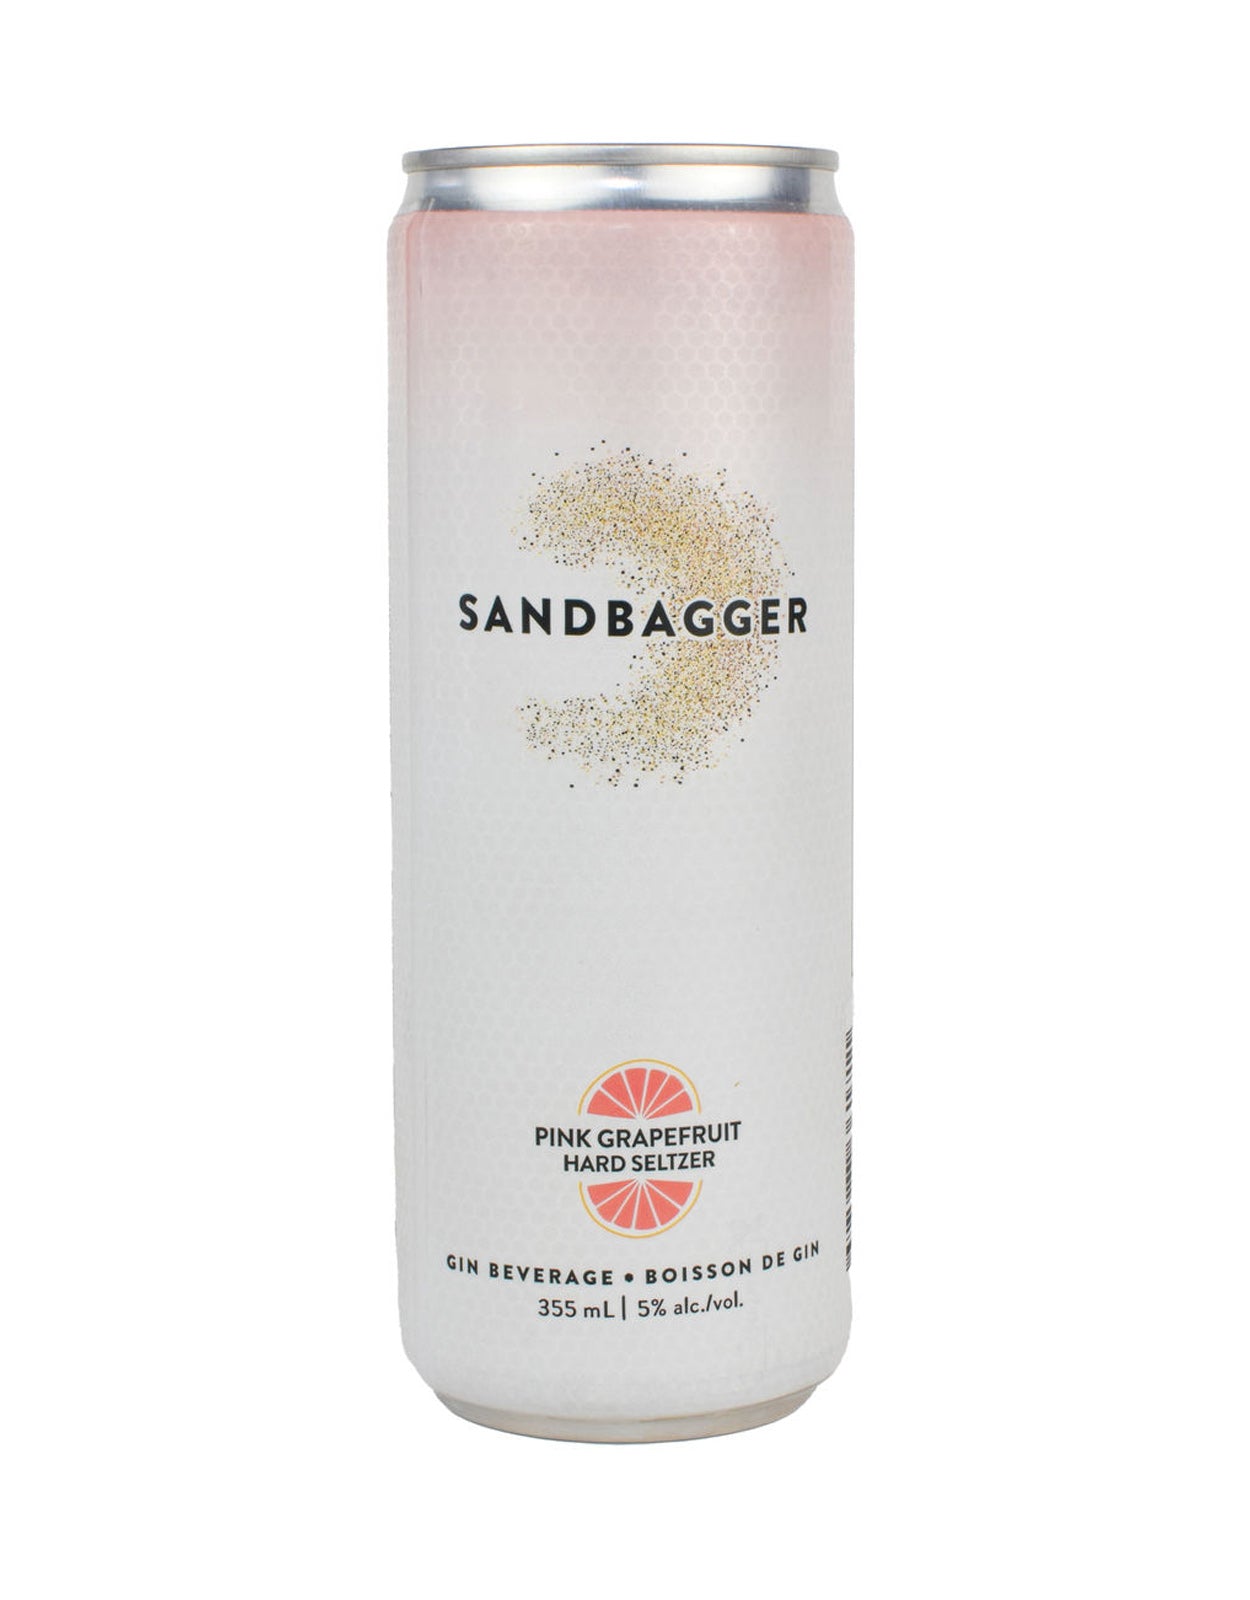 Sandbagger Pink Grapefruit Hard Seltzer 355 ml - 24 Cans